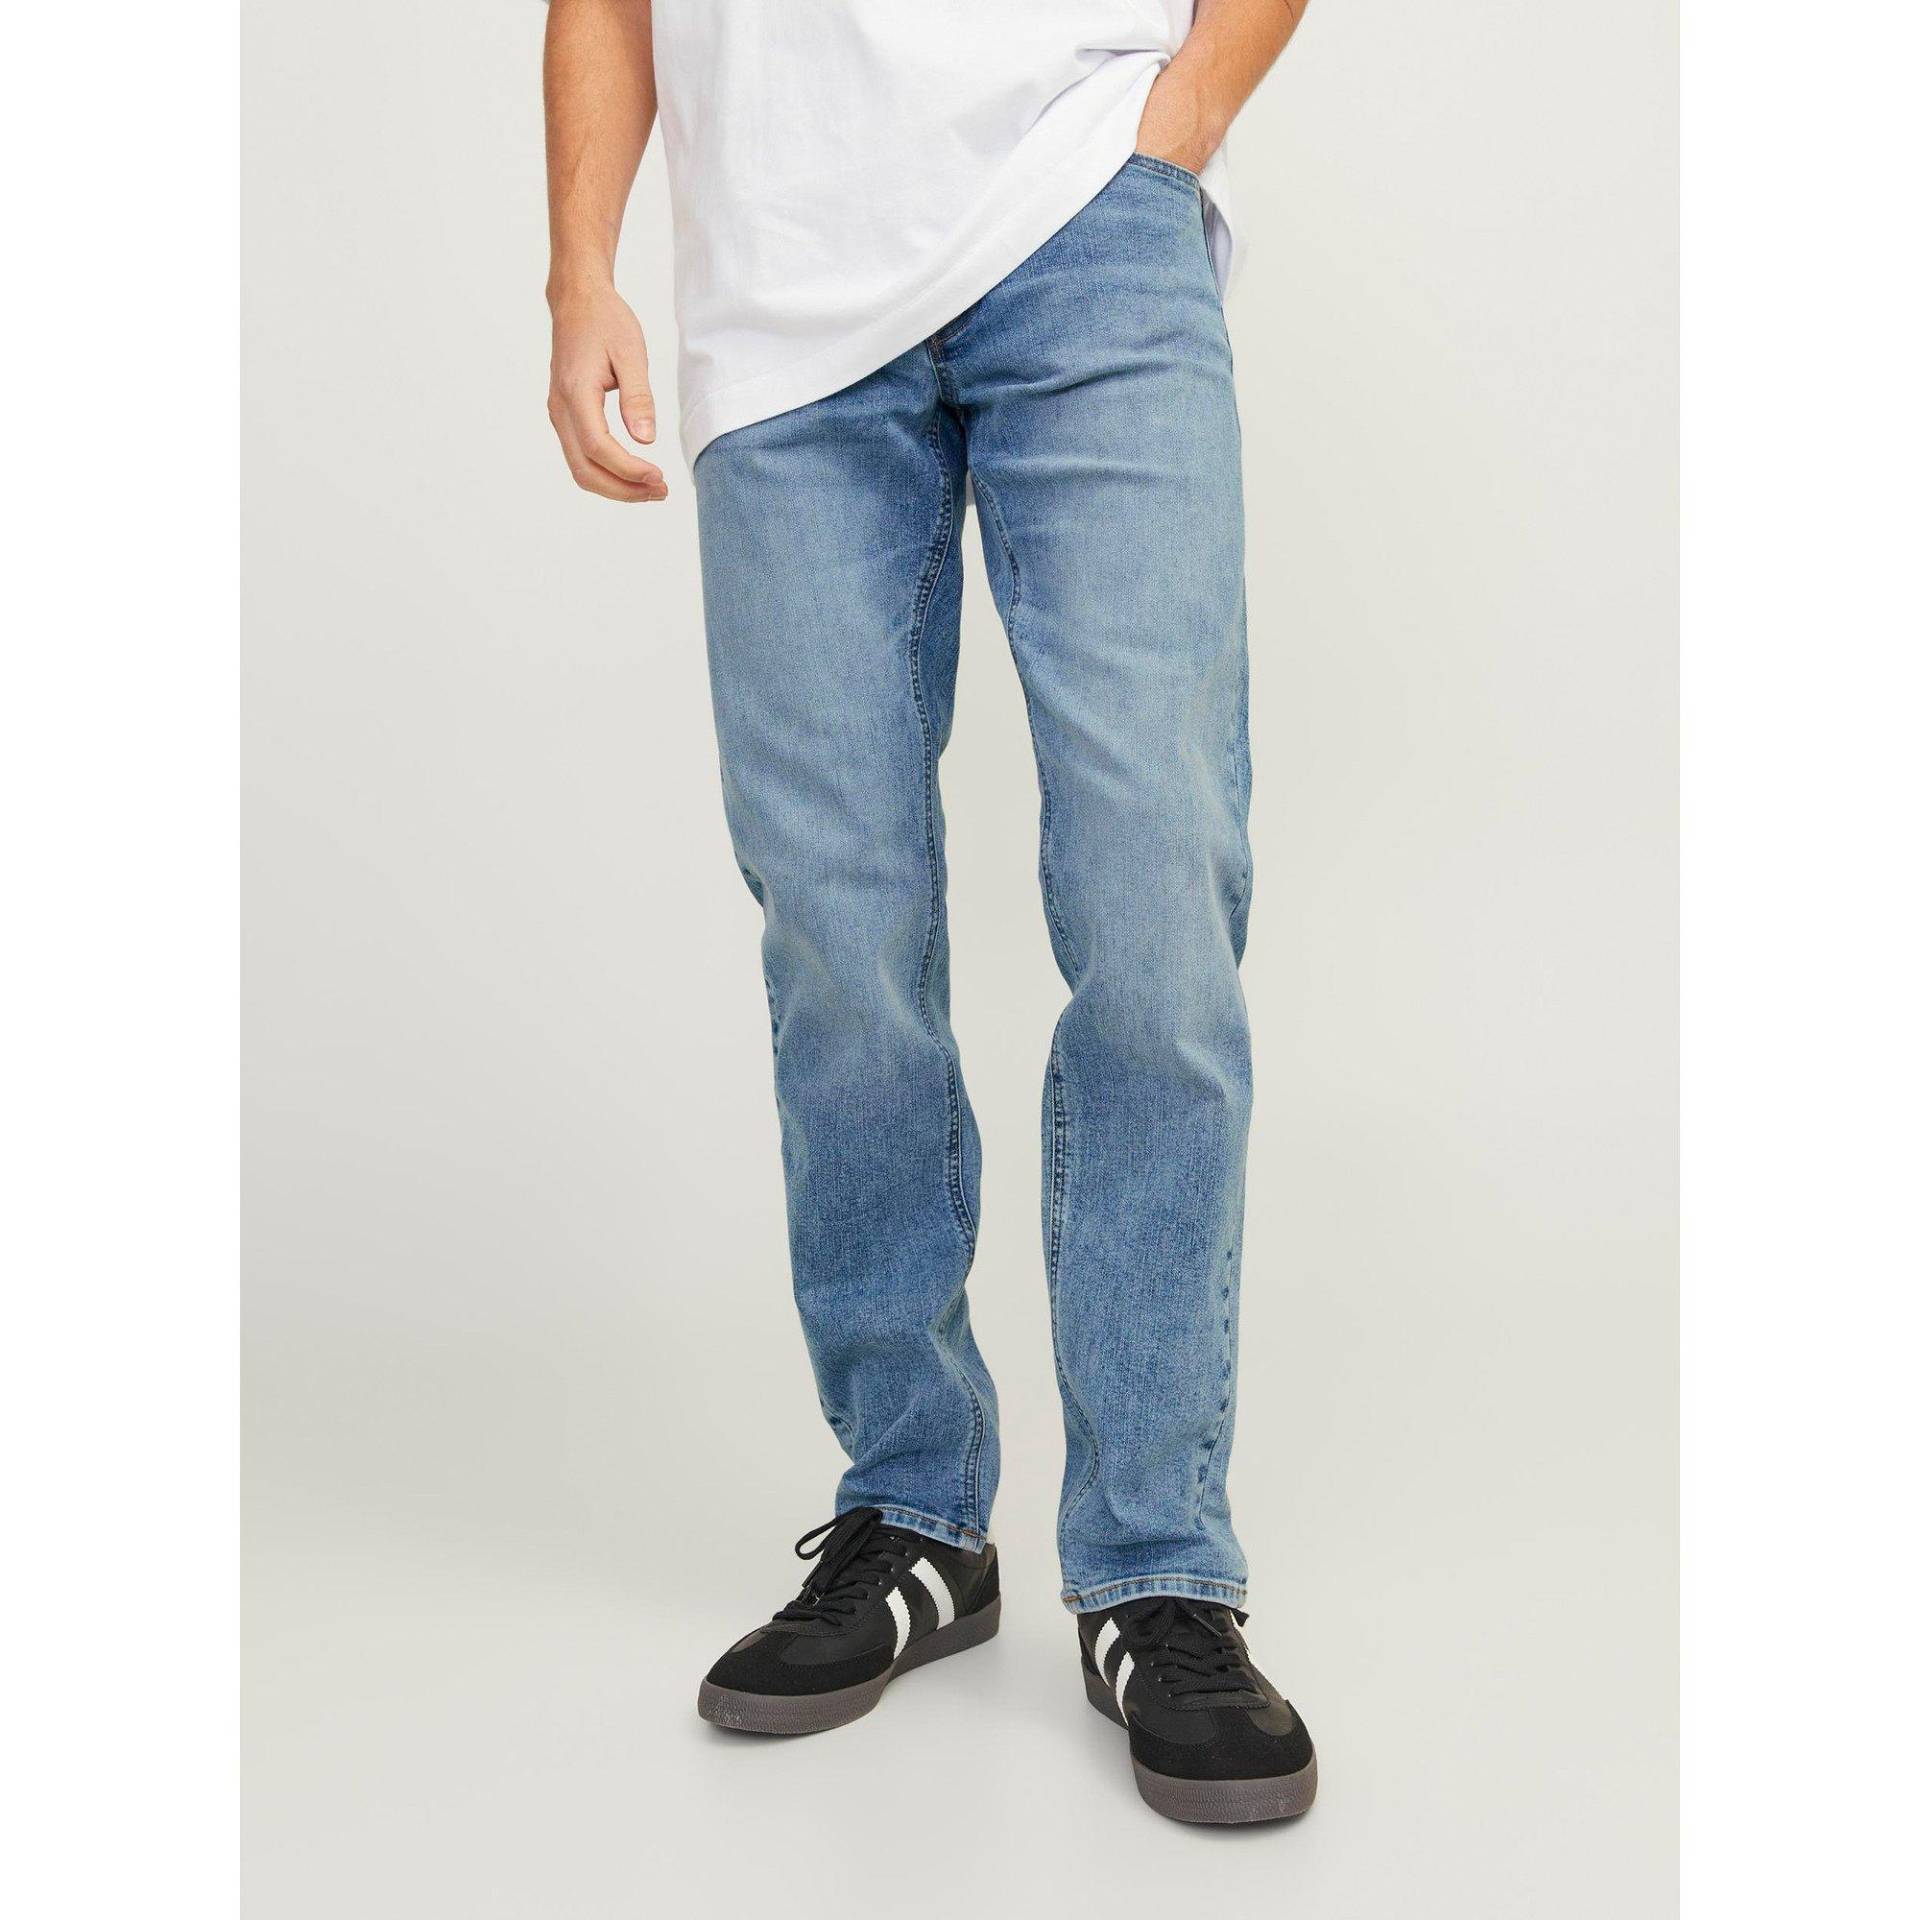 Jeans, Slim Fit Herren Blau Denim L32/W30 von JACK & JONES